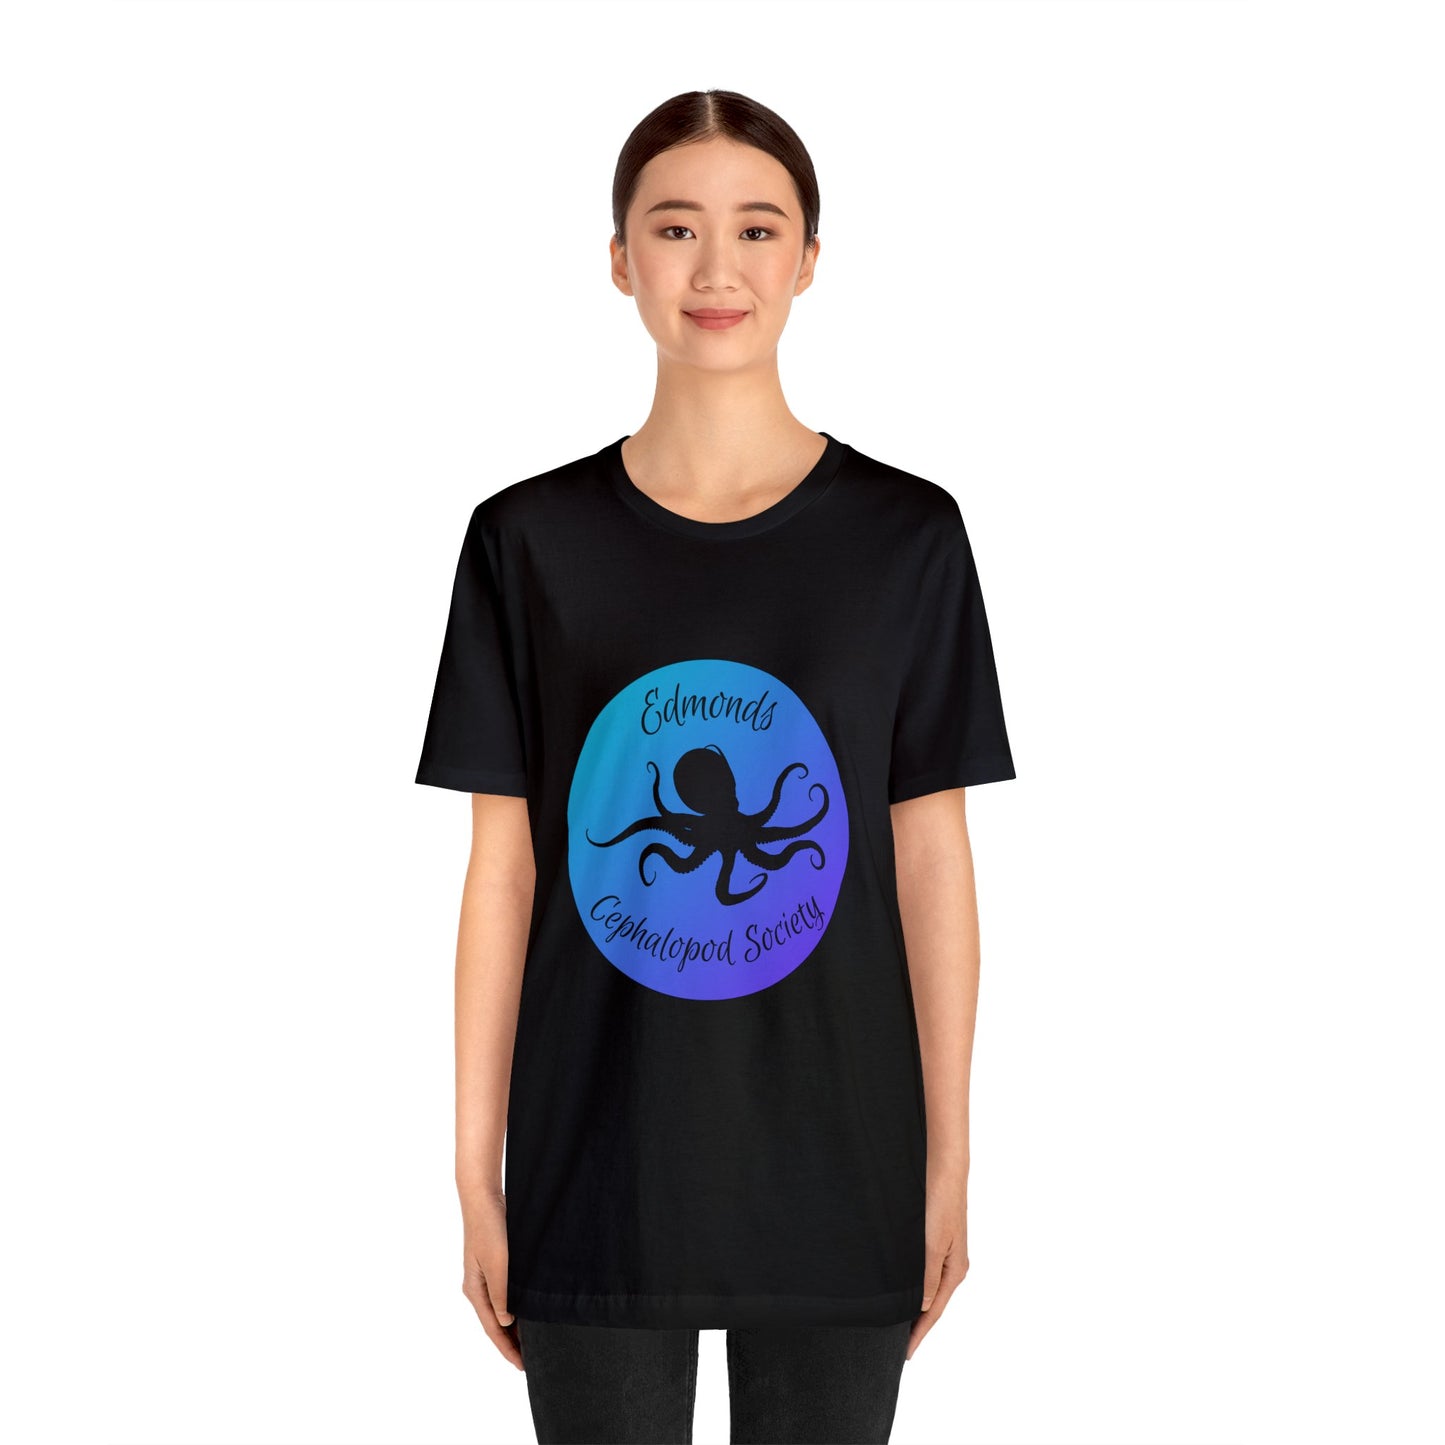 Edmonds Cephalopod Society T-shirt